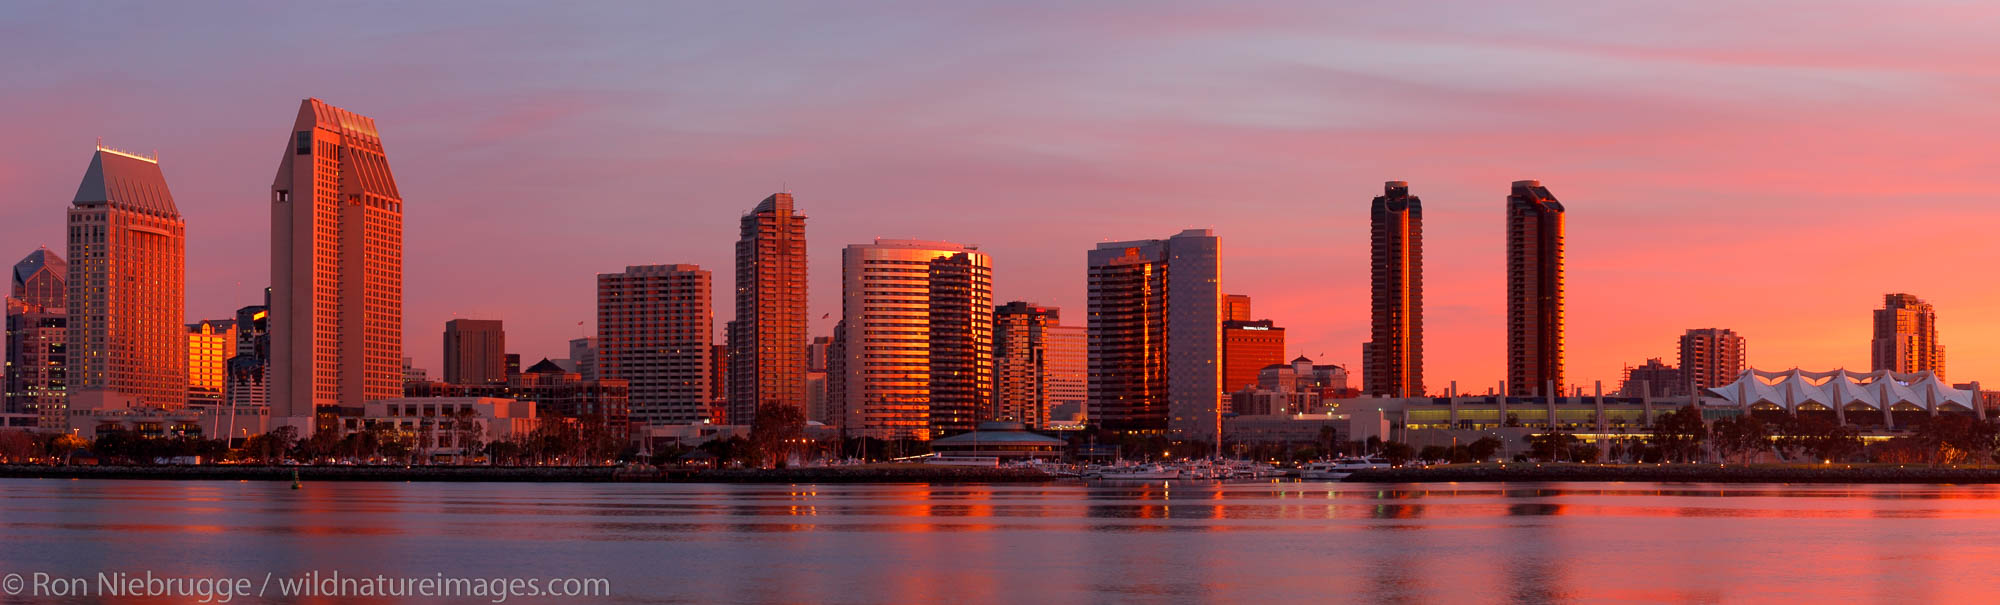 Panoramic of the San Diego skyline at surnrise, California.